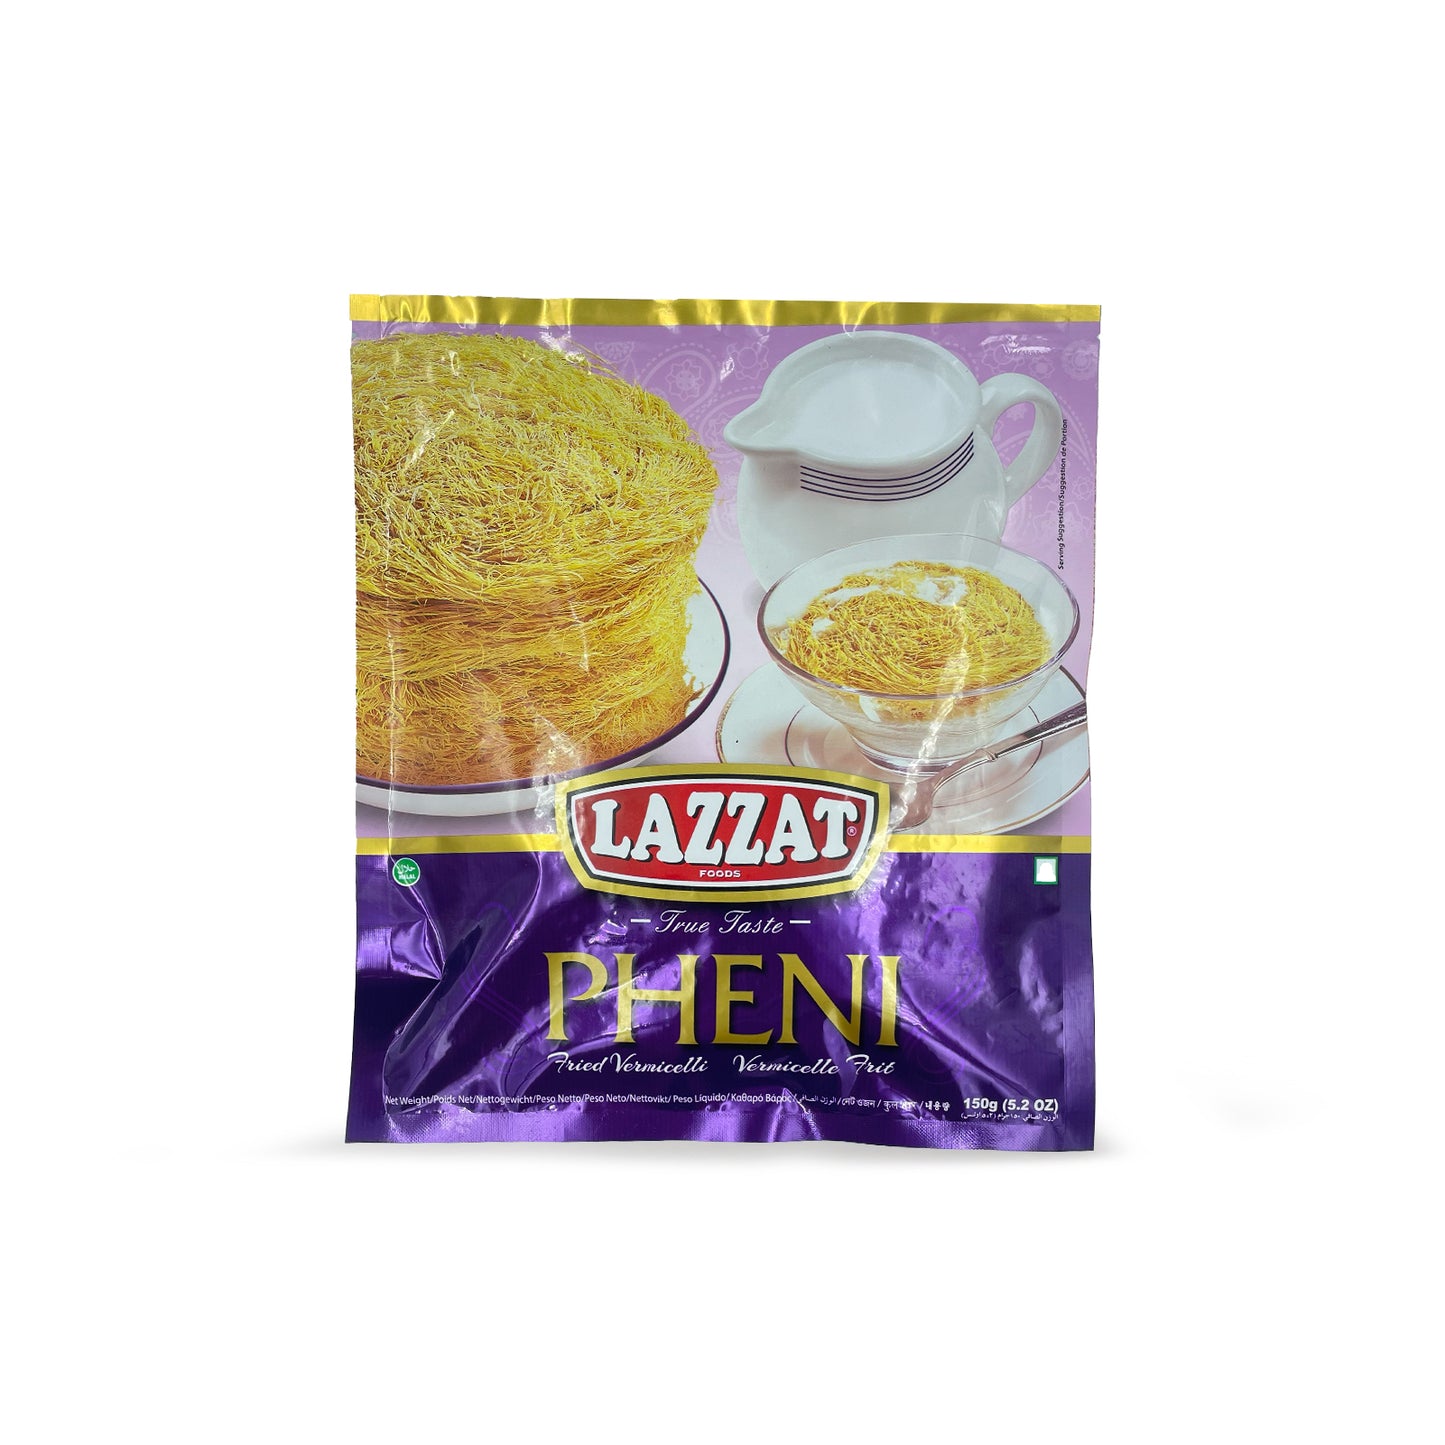 Lazzat Pheni (Fried Vermicelli) 150G